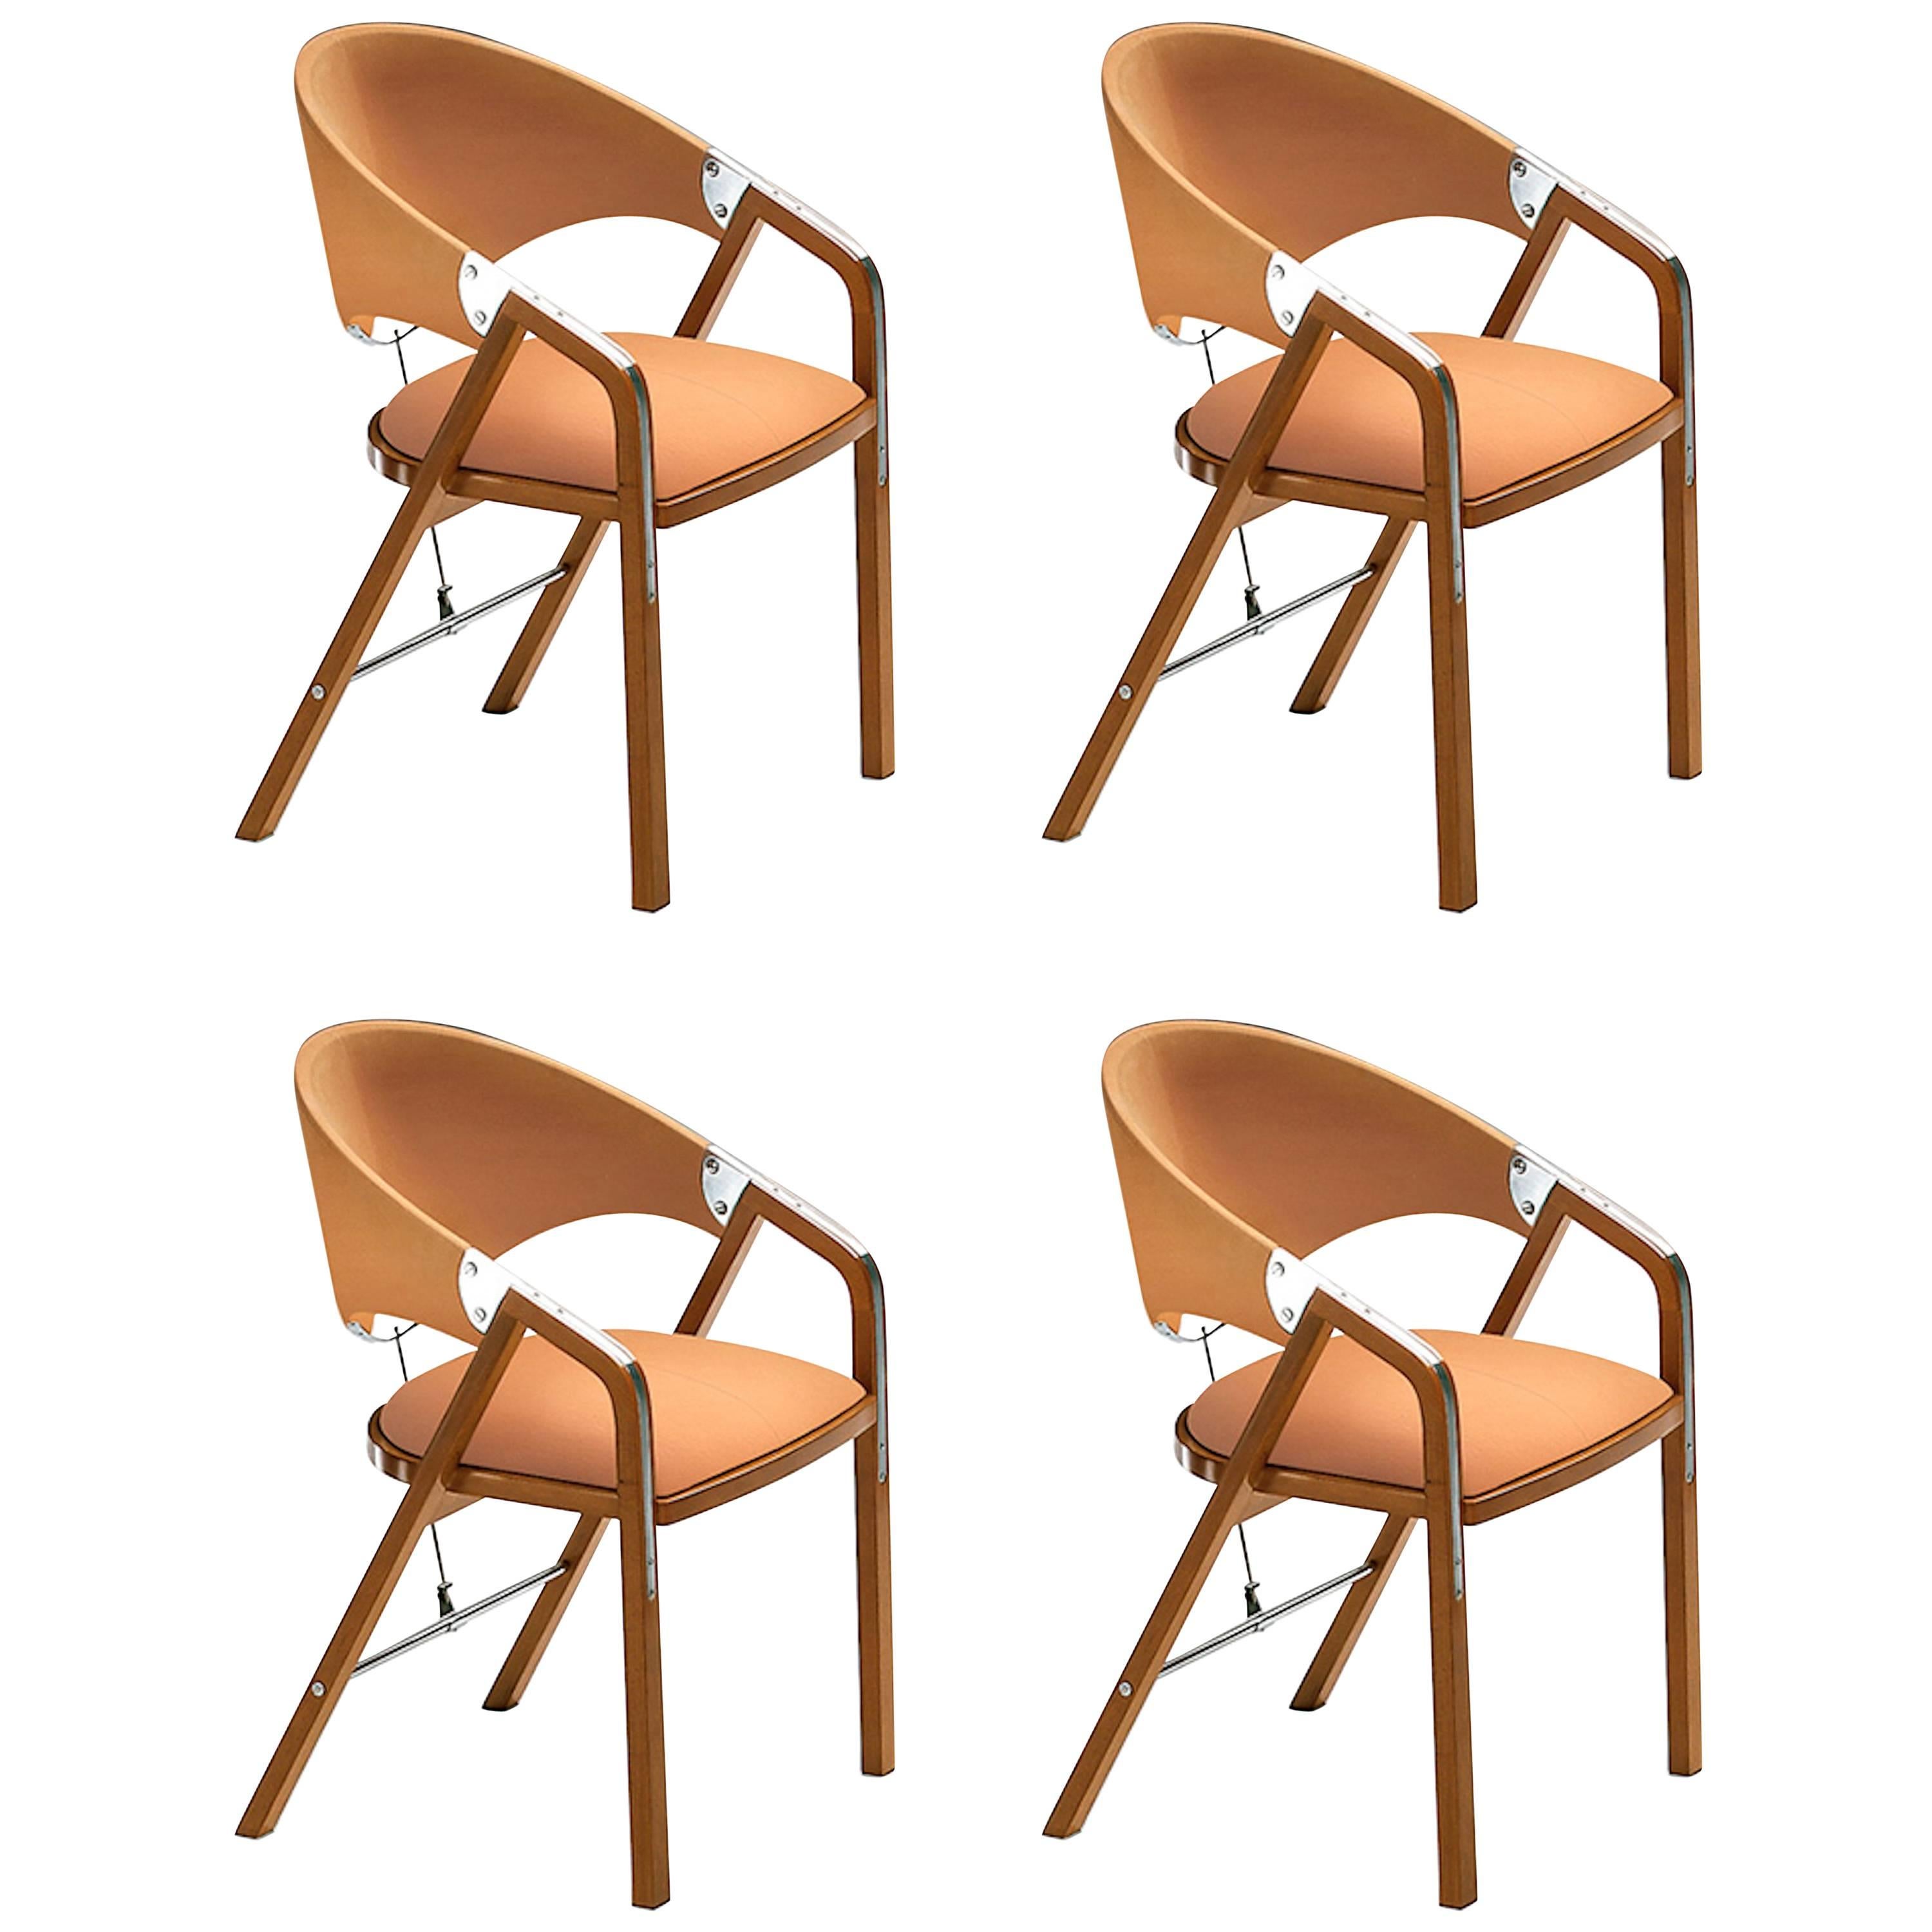 Four Chairs in Ligth Walnut. Designed by J. Tresserra, 1987